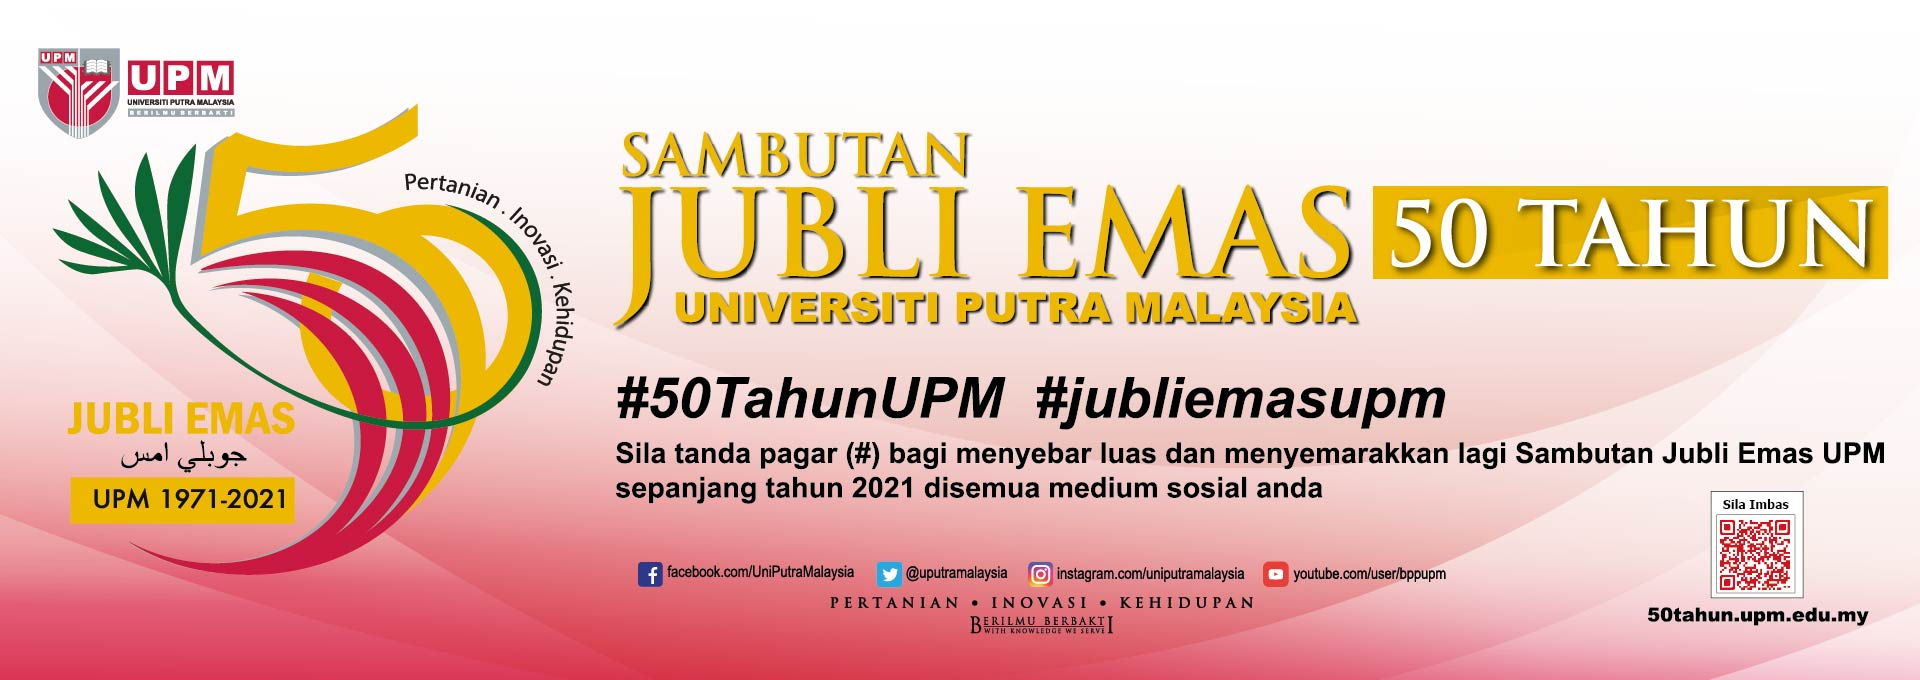 UPM 50 Years Golden Jubilee Celebrations (1971-2021)